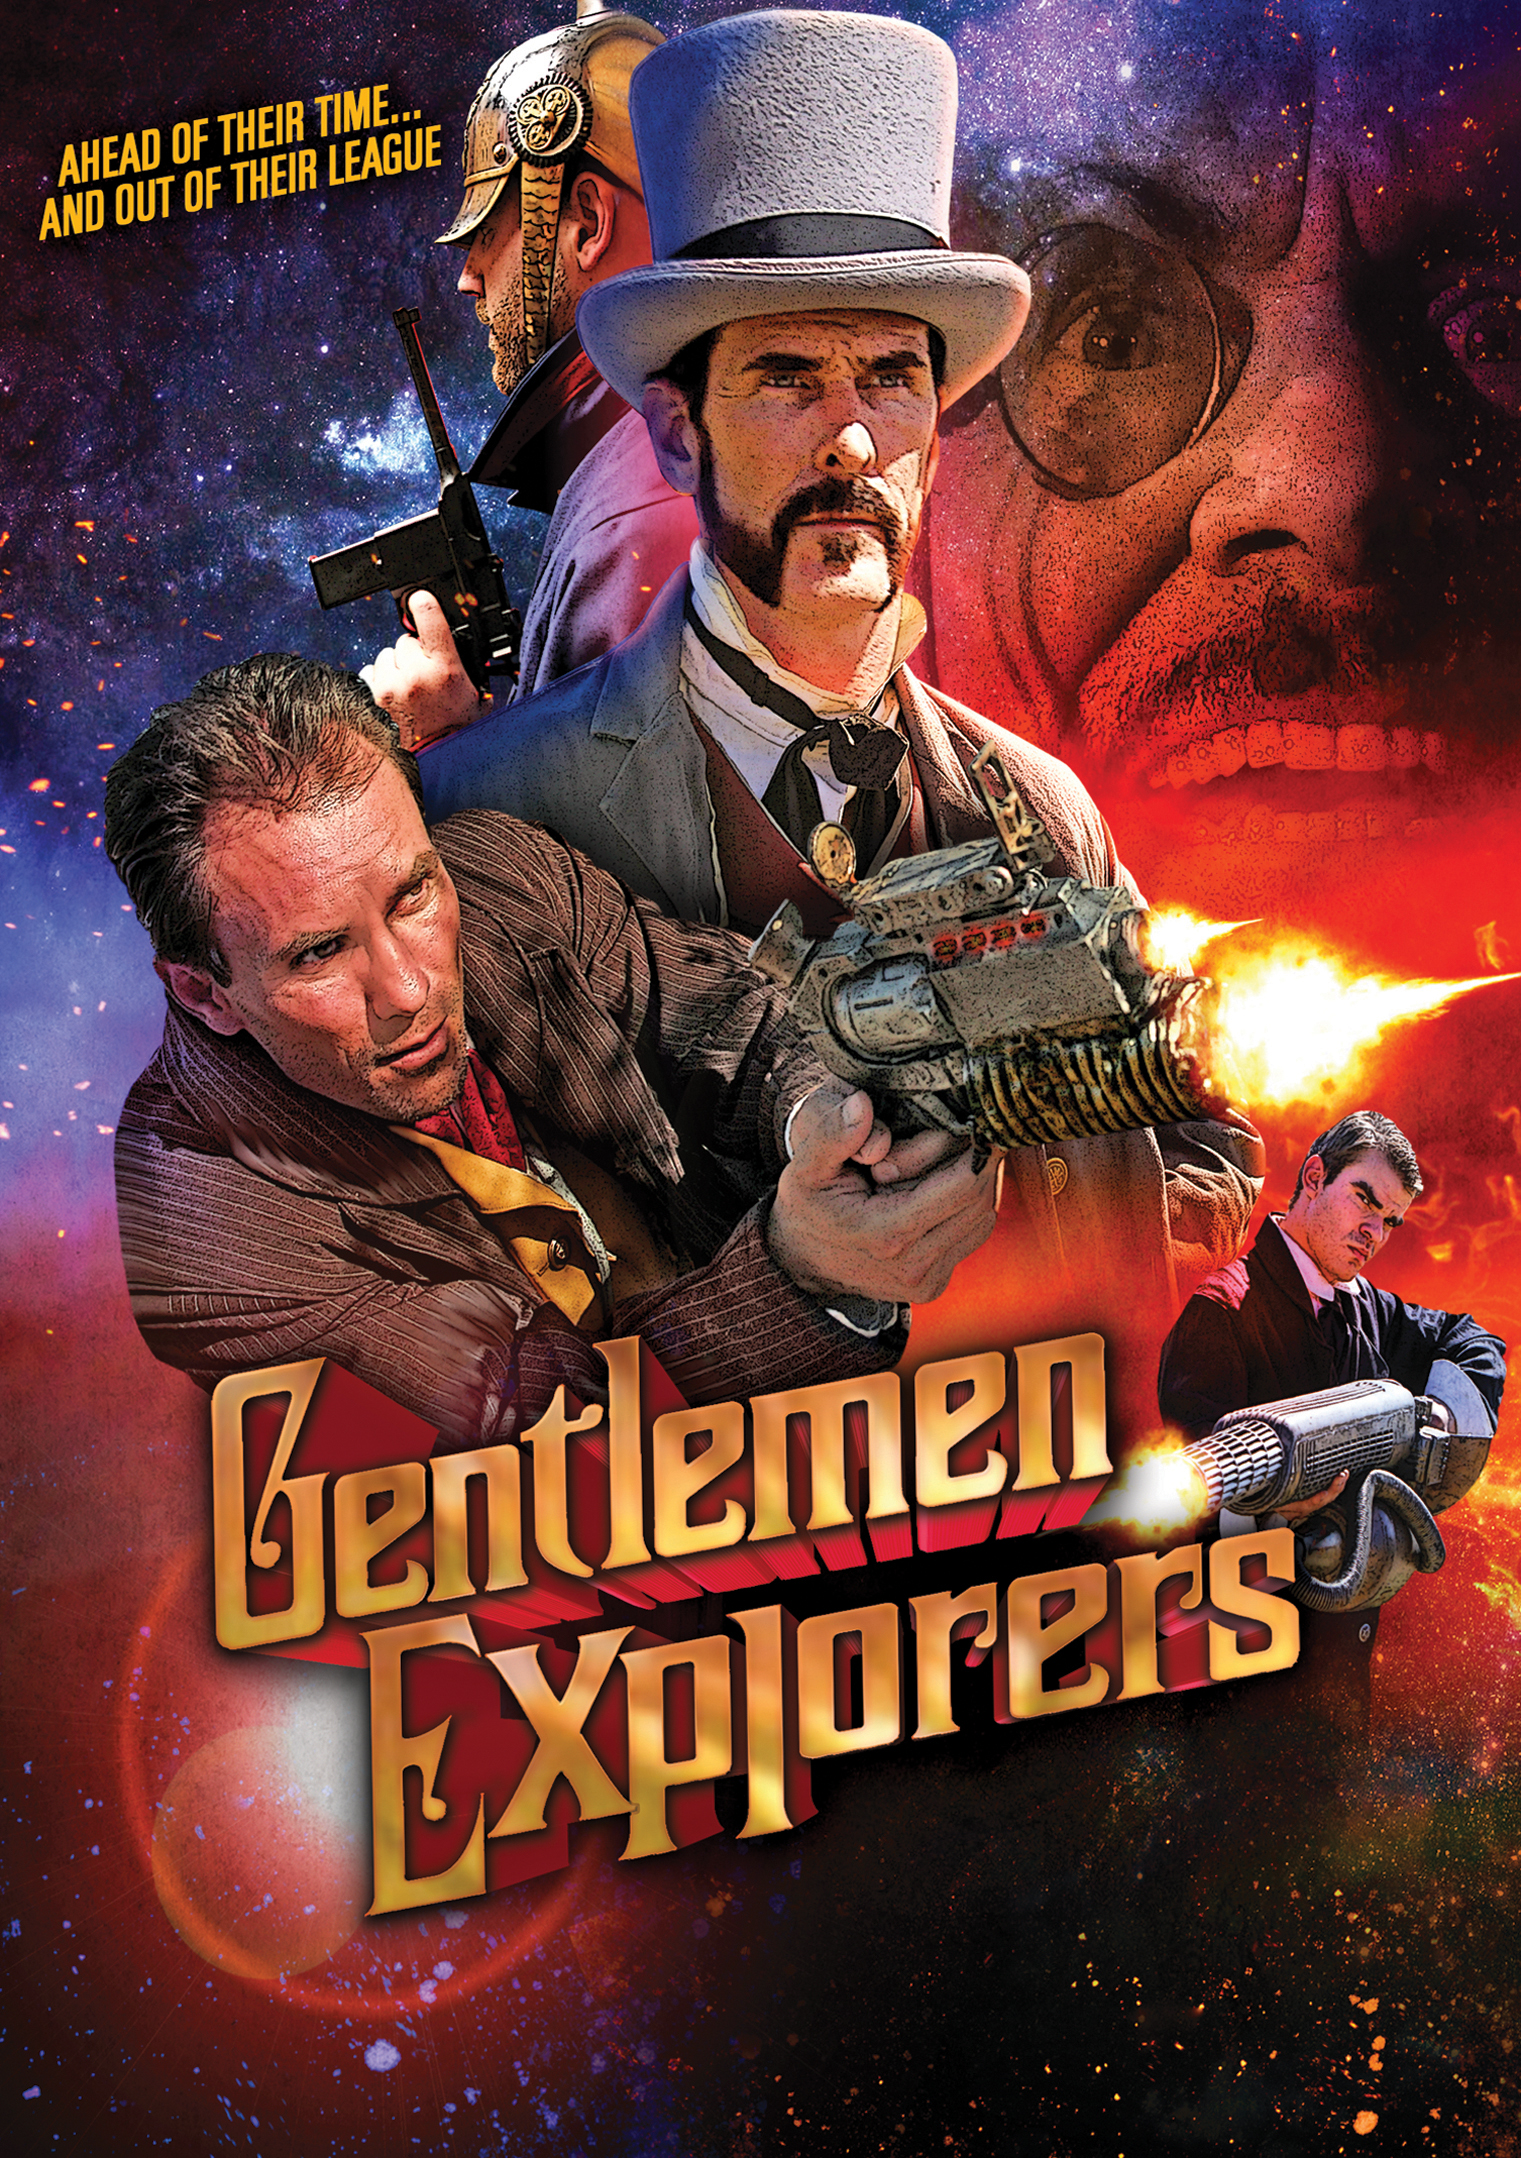 Gentlemen Explorers (2013) - Matt Snead | Synopsis, Characteristics, Moods, Themes and ...1521 x 2158